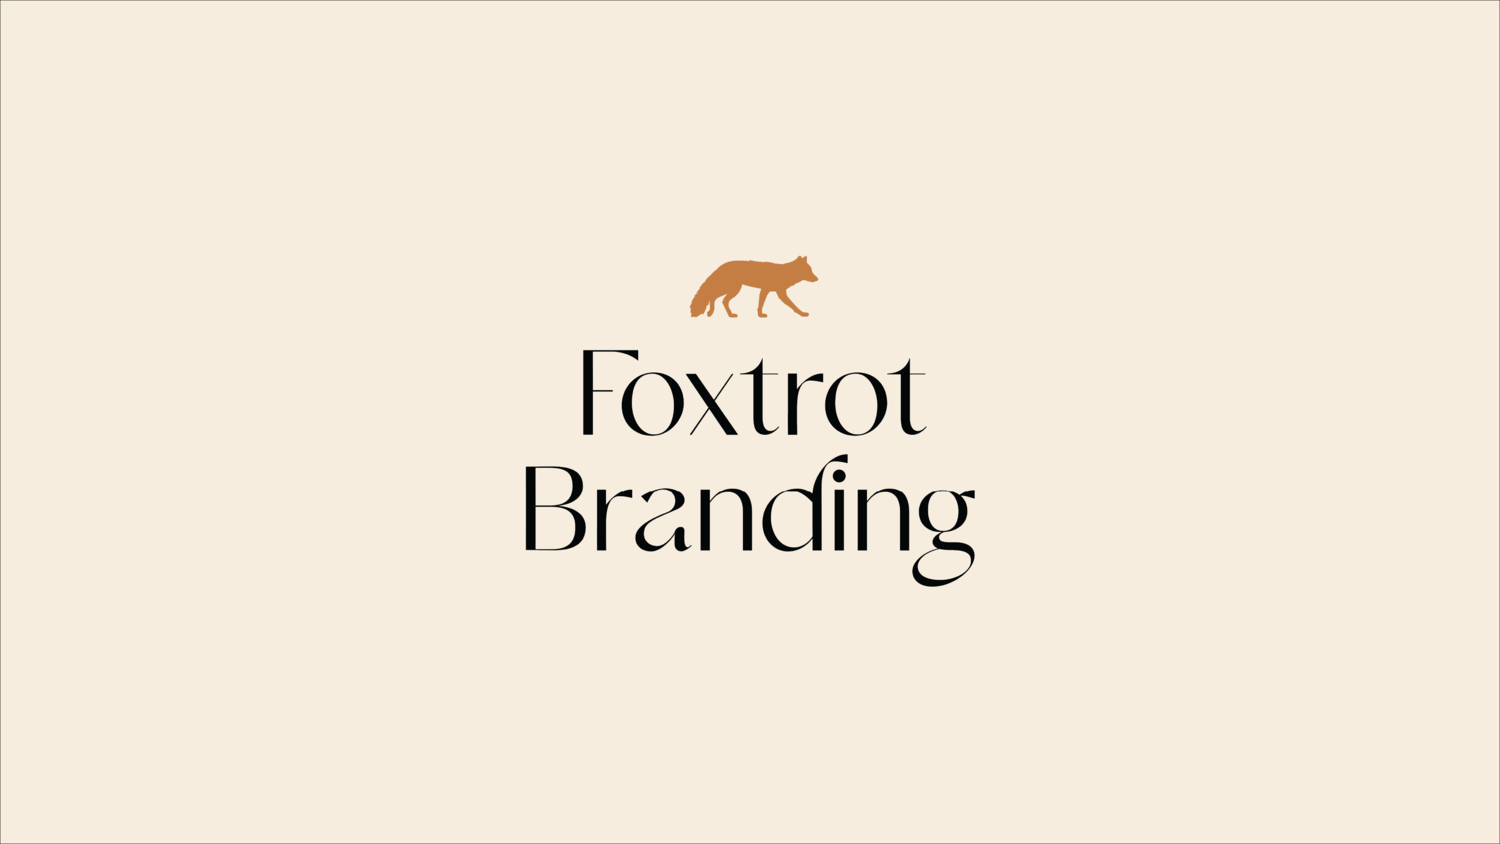 Foxtrot Branding